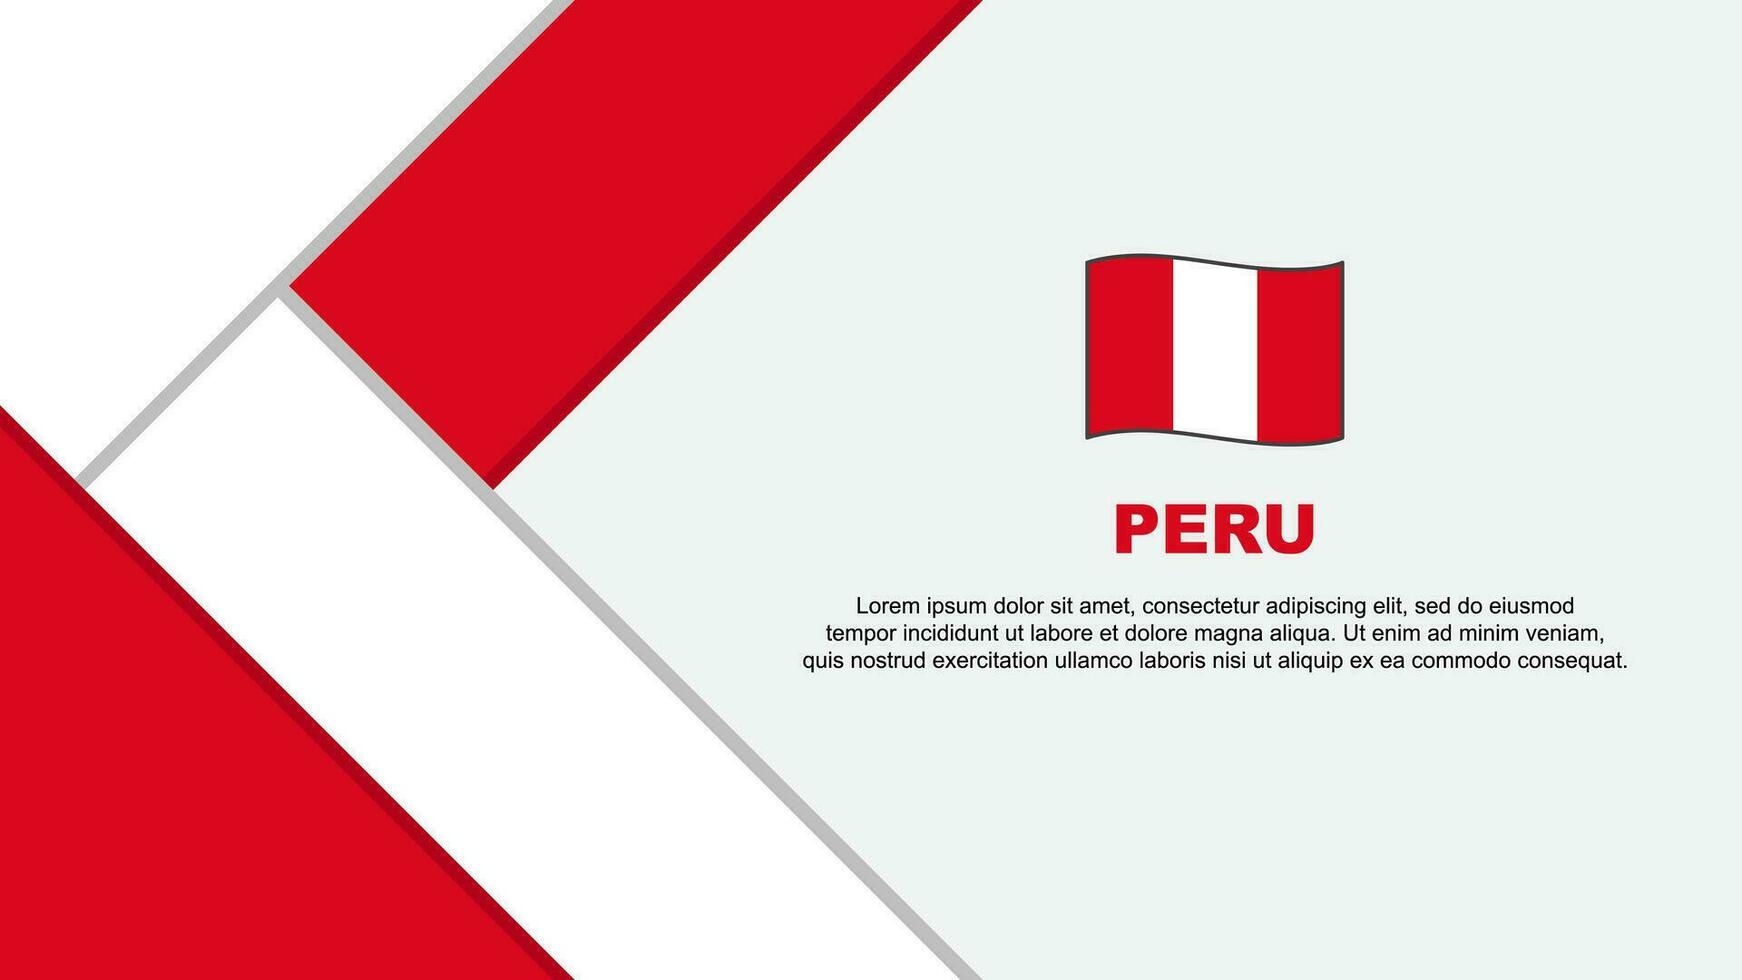 Peru Flag Abstract Background Design Template. Peru Independence Day Banner Cartoon Vector Illustration. Peru Illustration